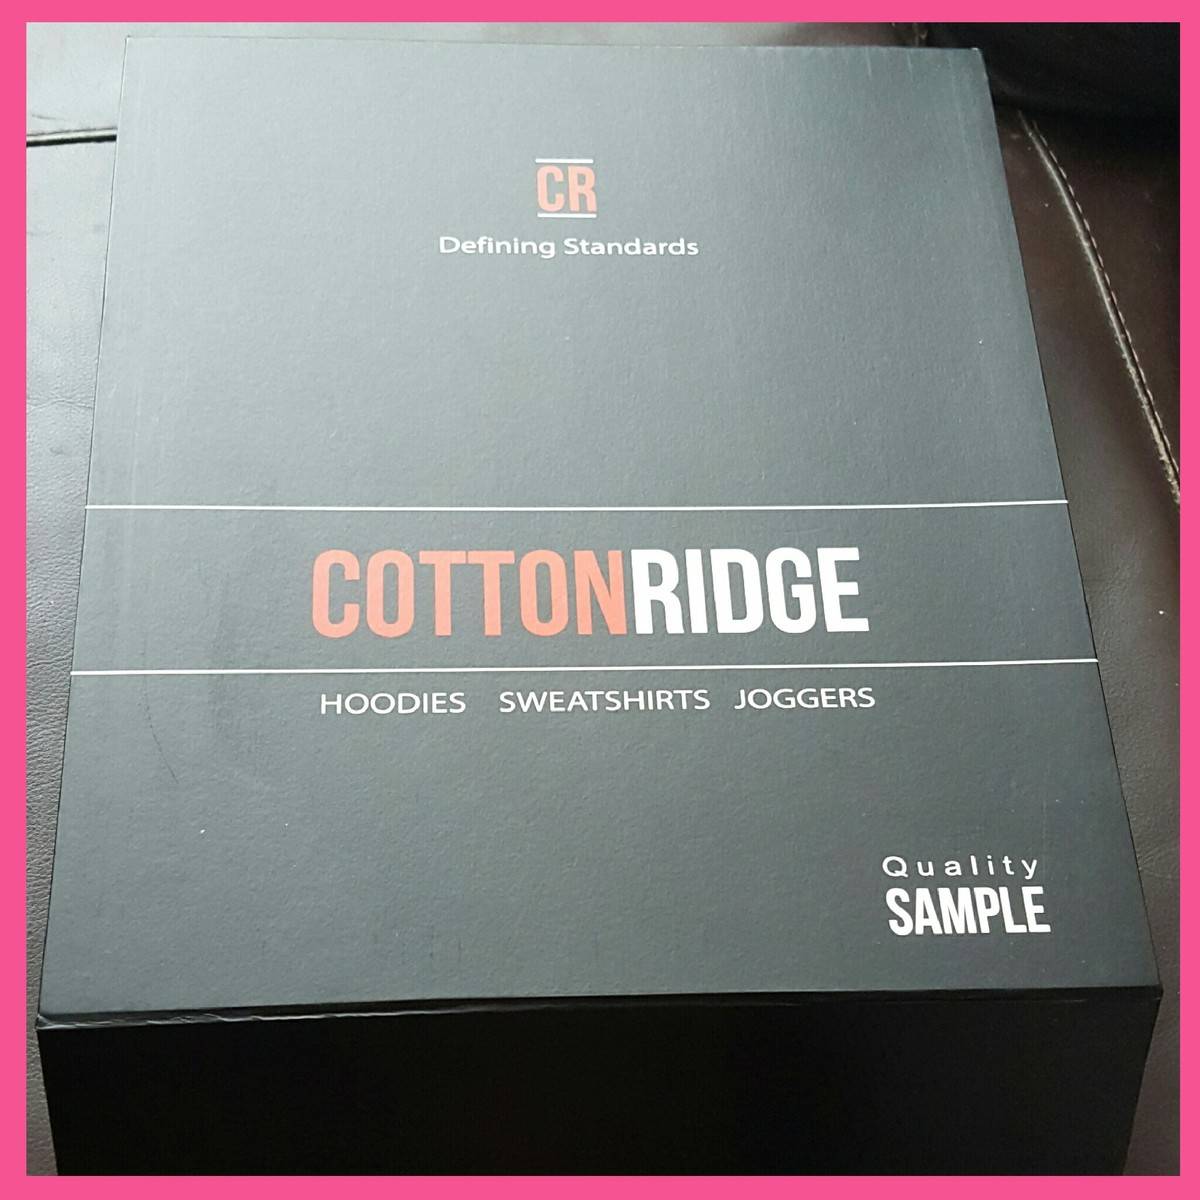 Cottonridge Club hoody: Review & Win!